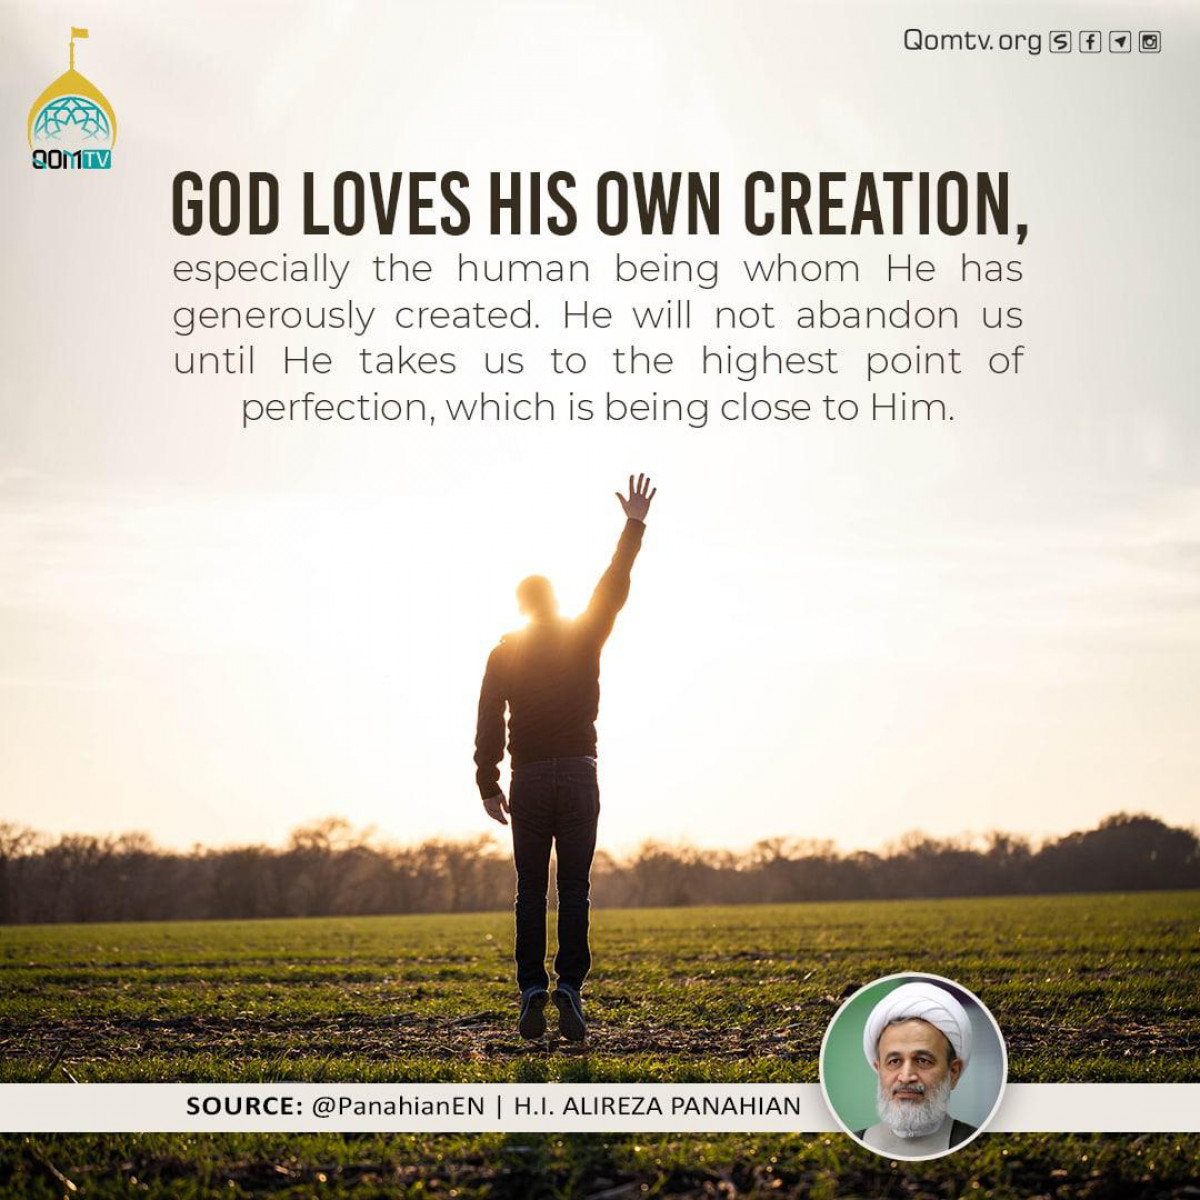 God loves His own creation